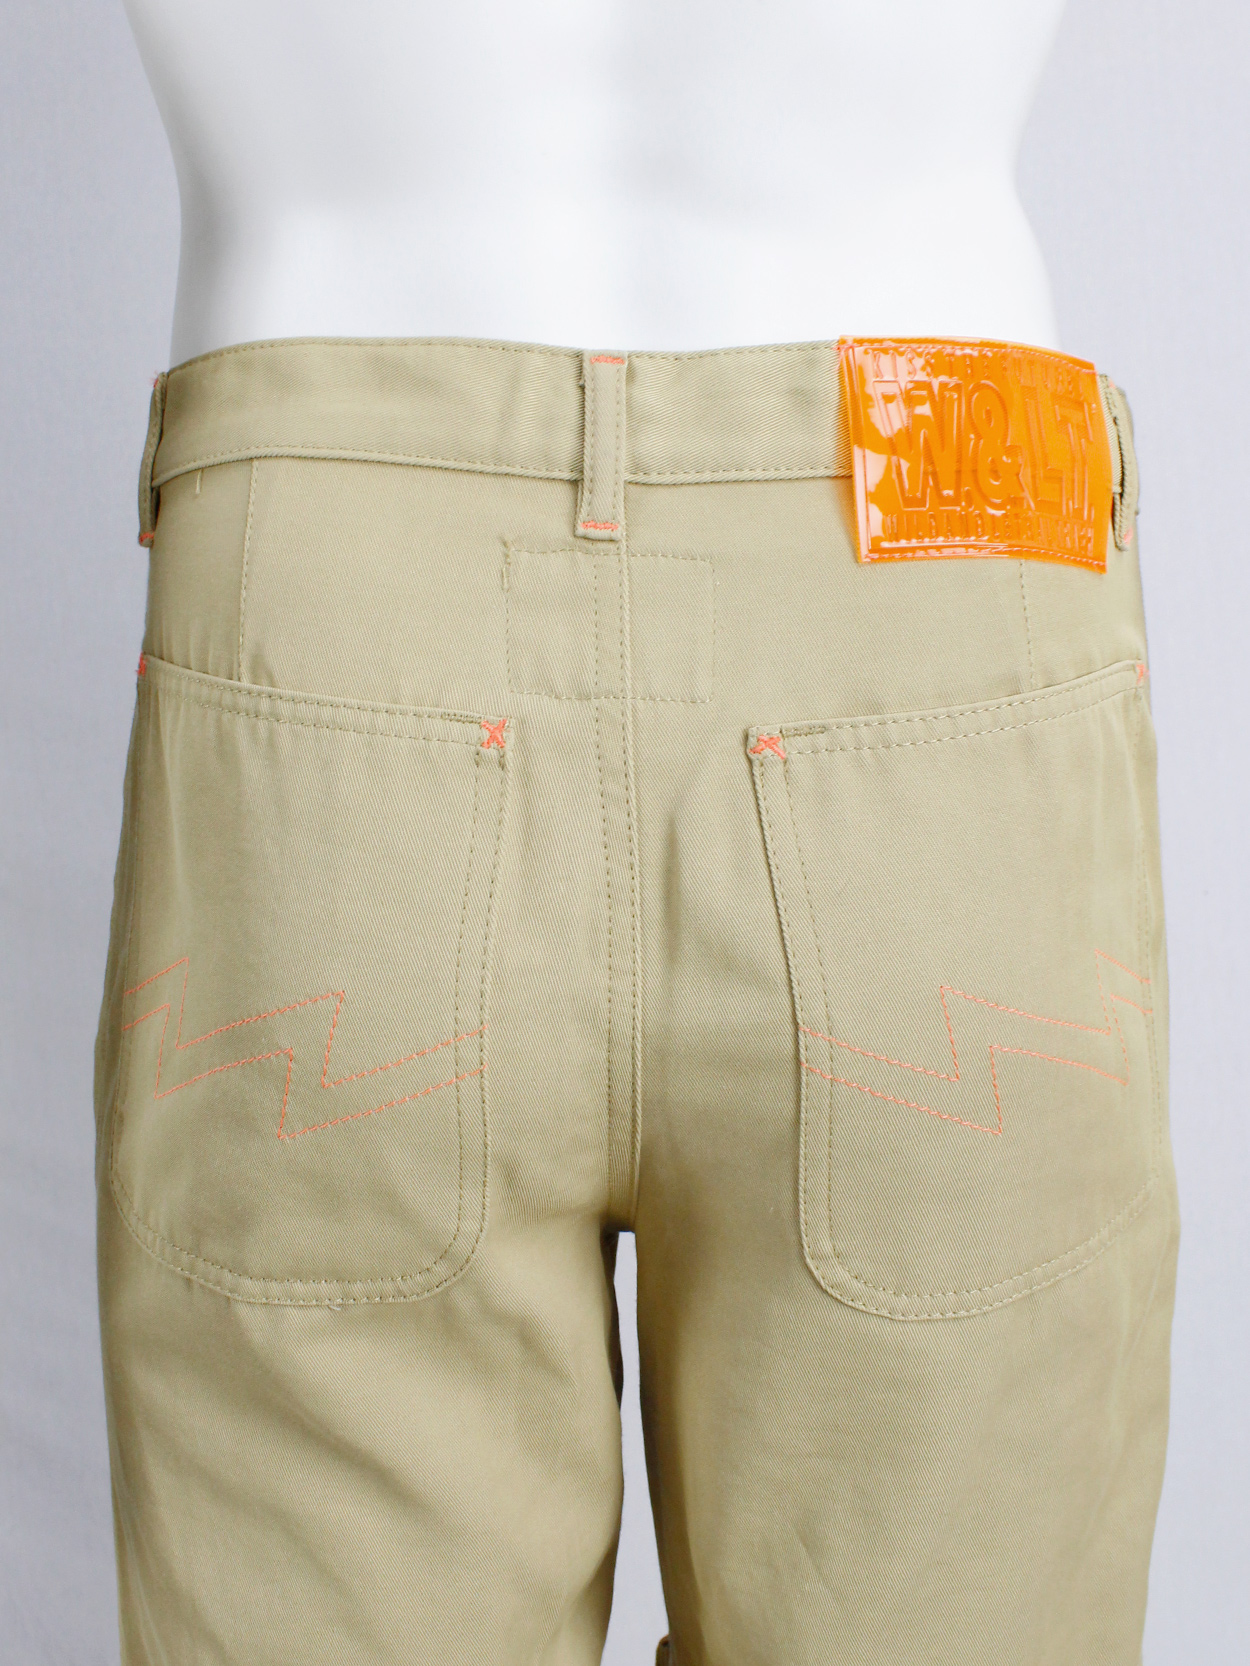 Walter Van Beirendonck WaLT beige trousers with kneepad pockets and neon orange details 90s (11)